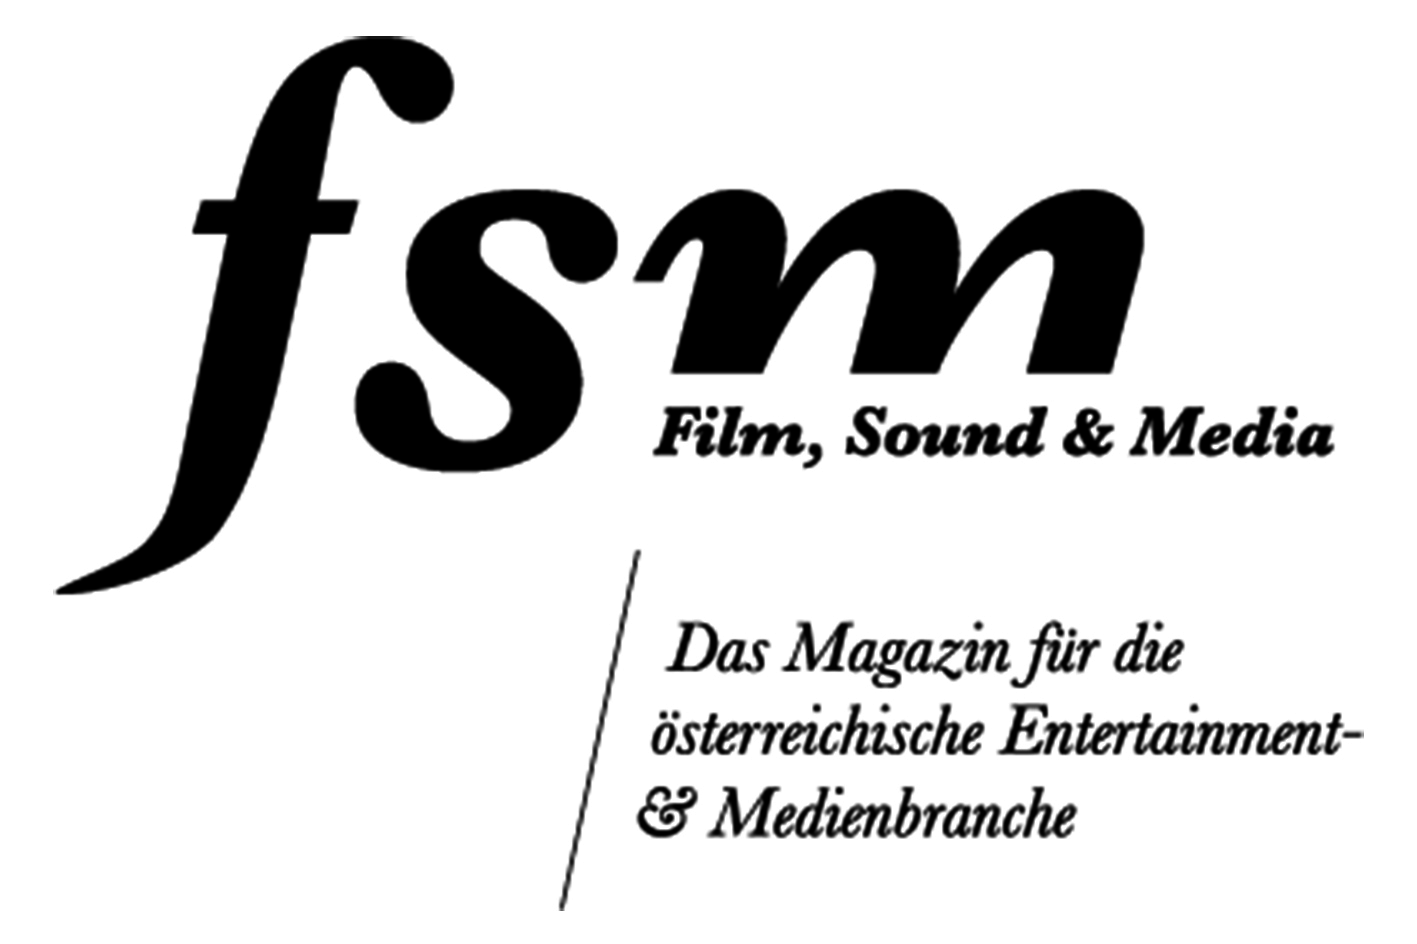 Film, Sound & Media